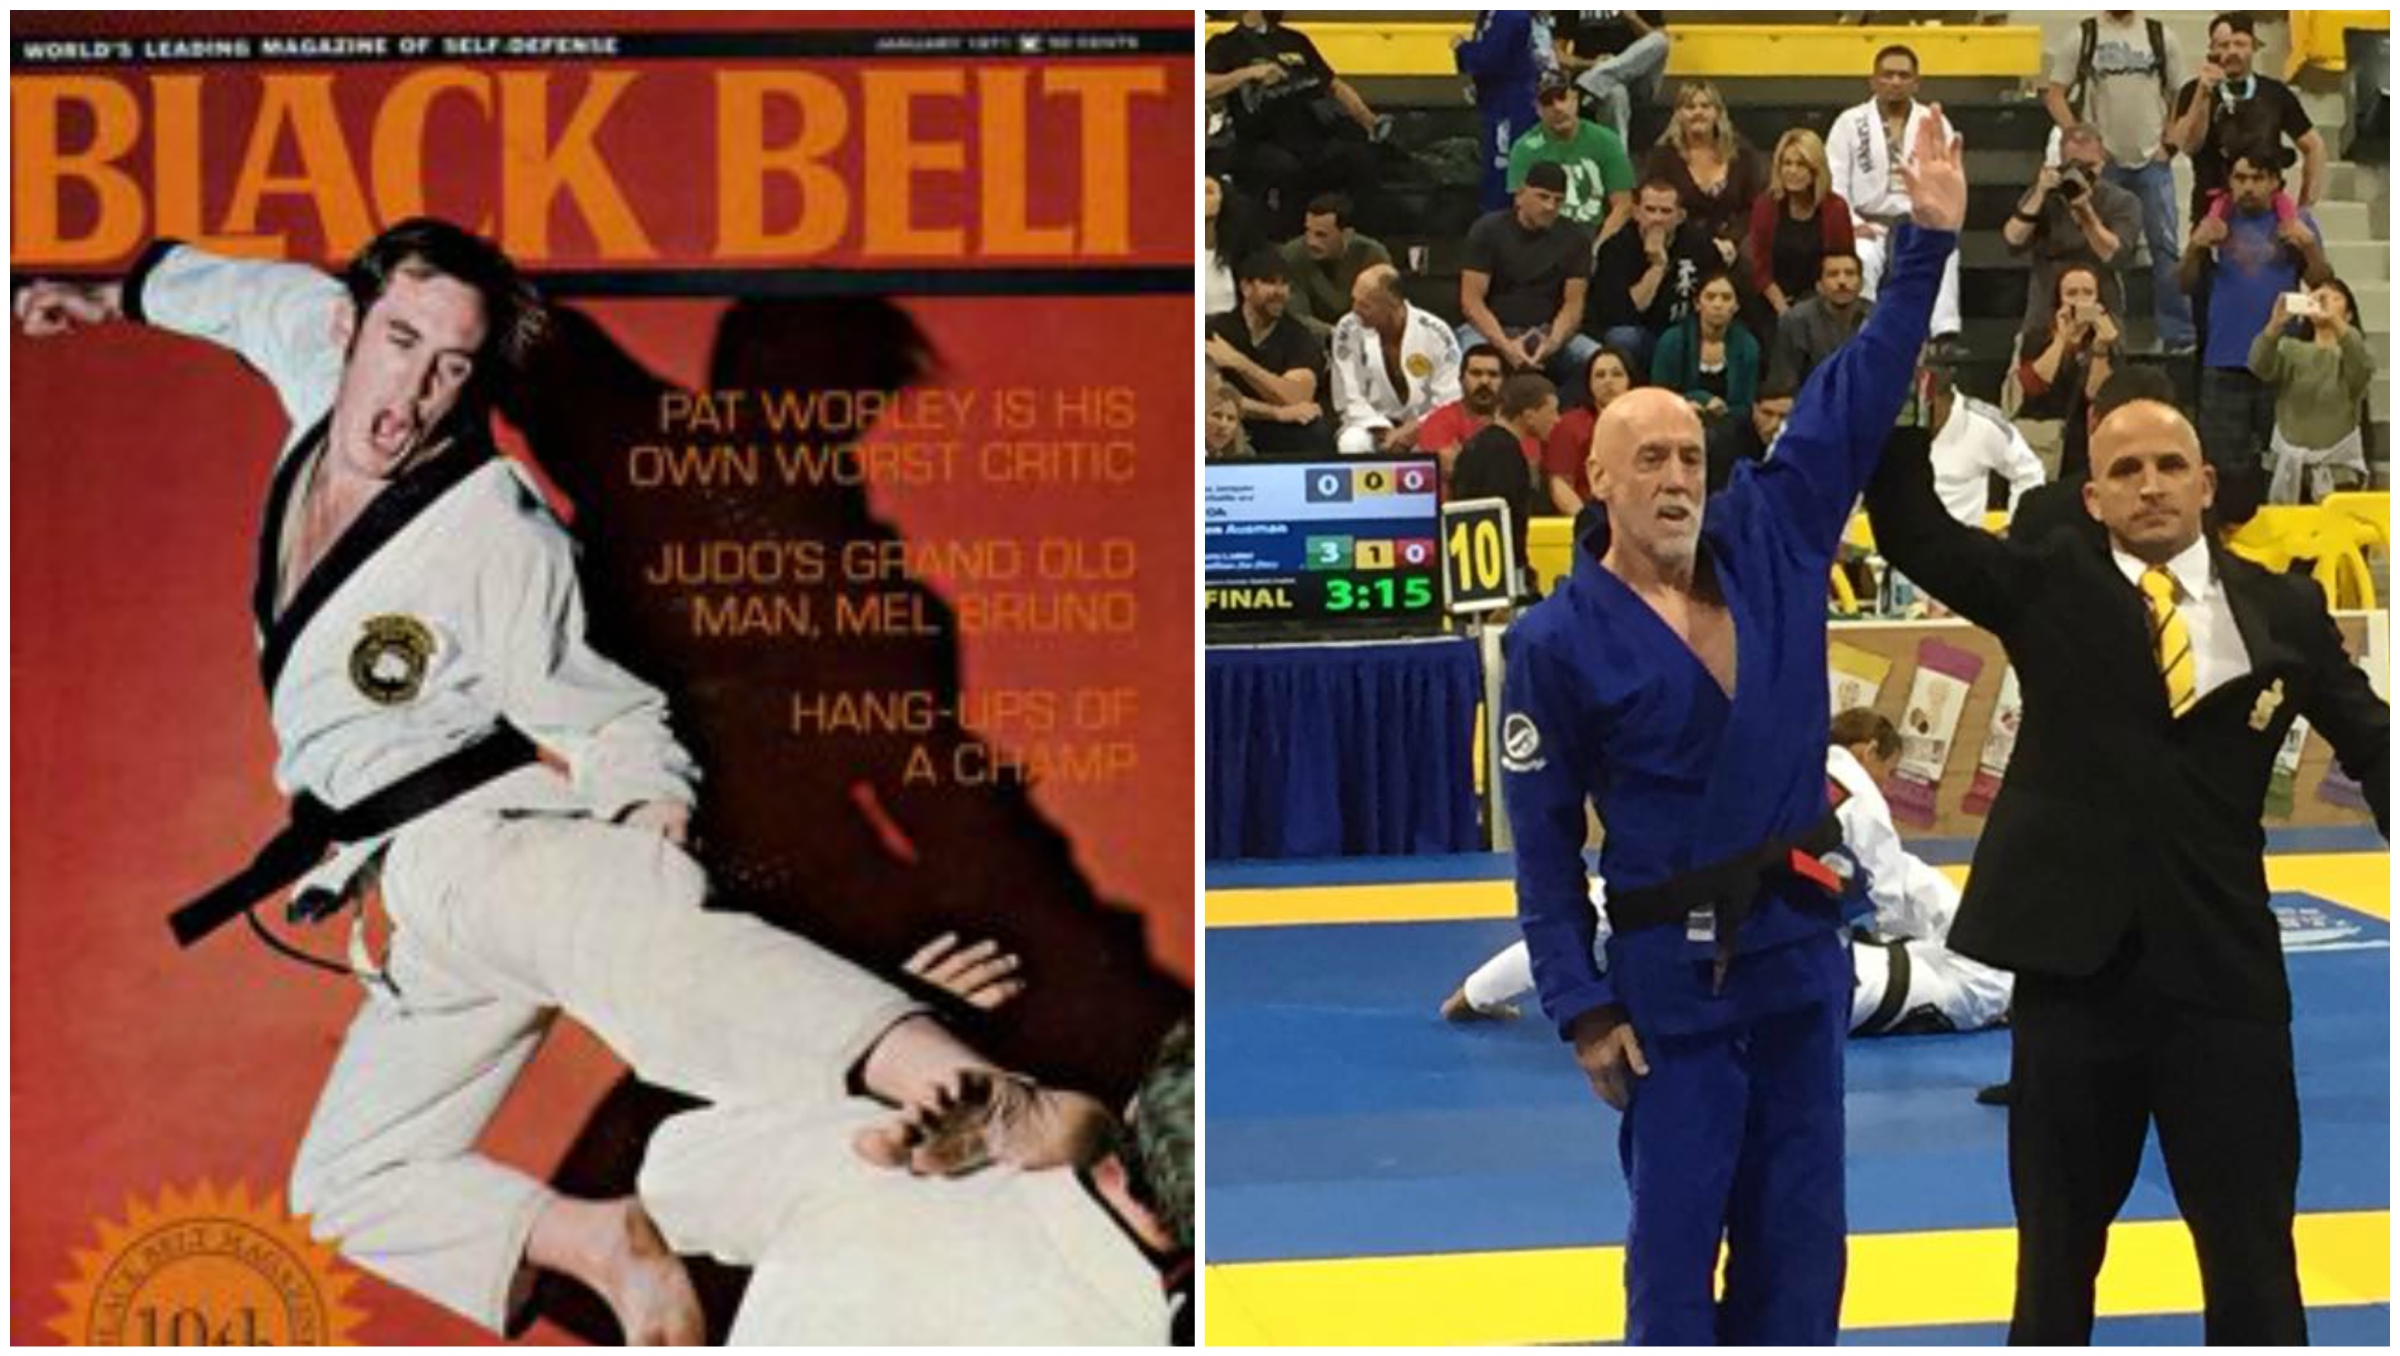 Inspiration: Pat Worley, Karate Legend & 2015 Pan Master Black Belt Champ